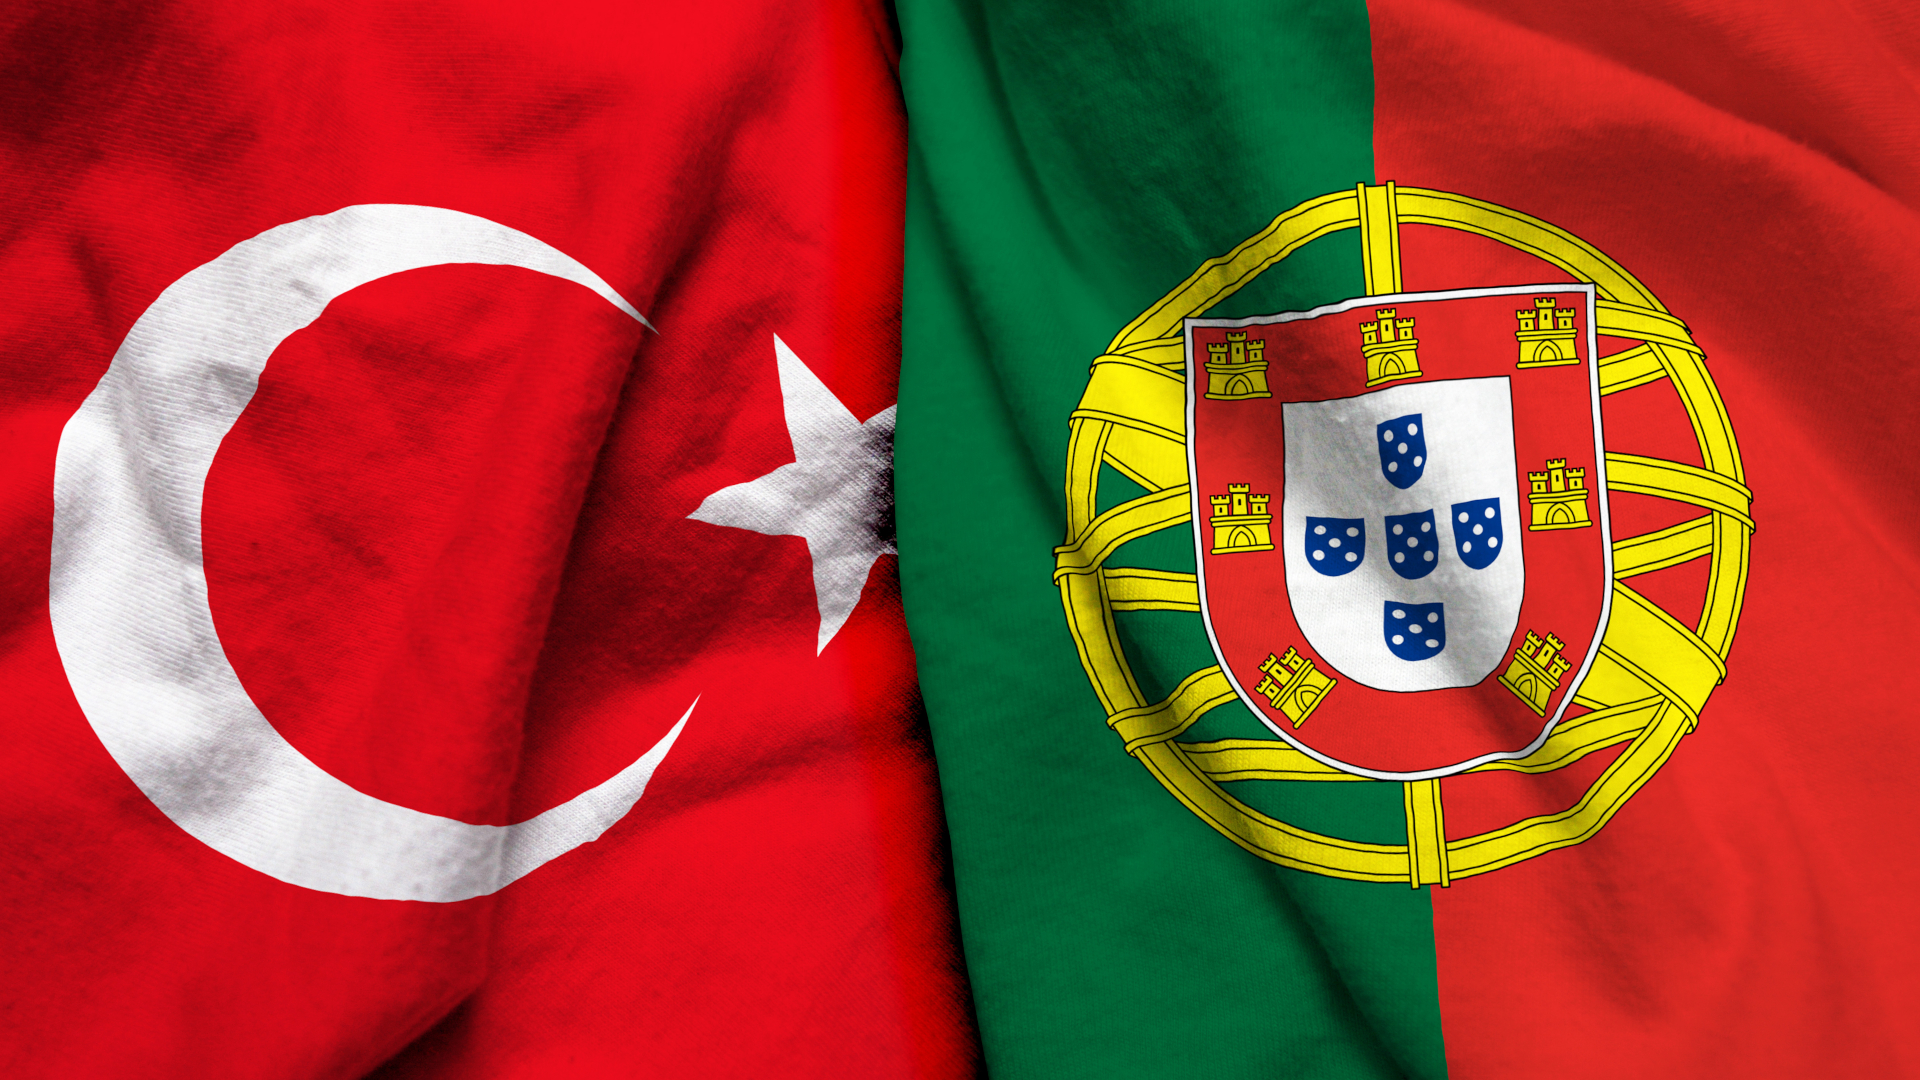 Portugal vs turkey